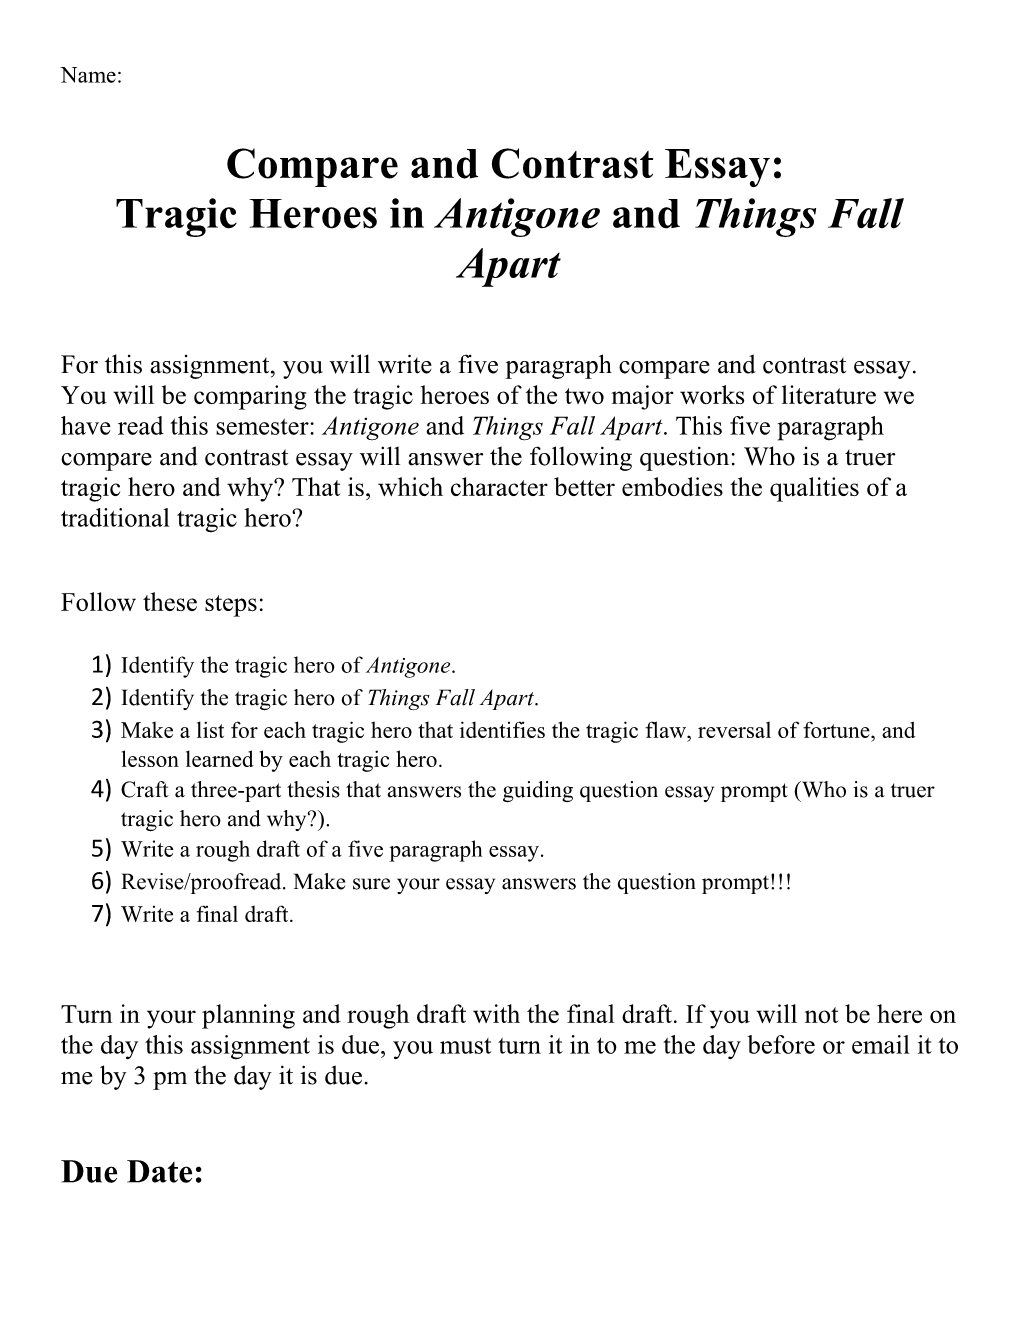 Tragic Heroes in Antigone and Things Fall Apart